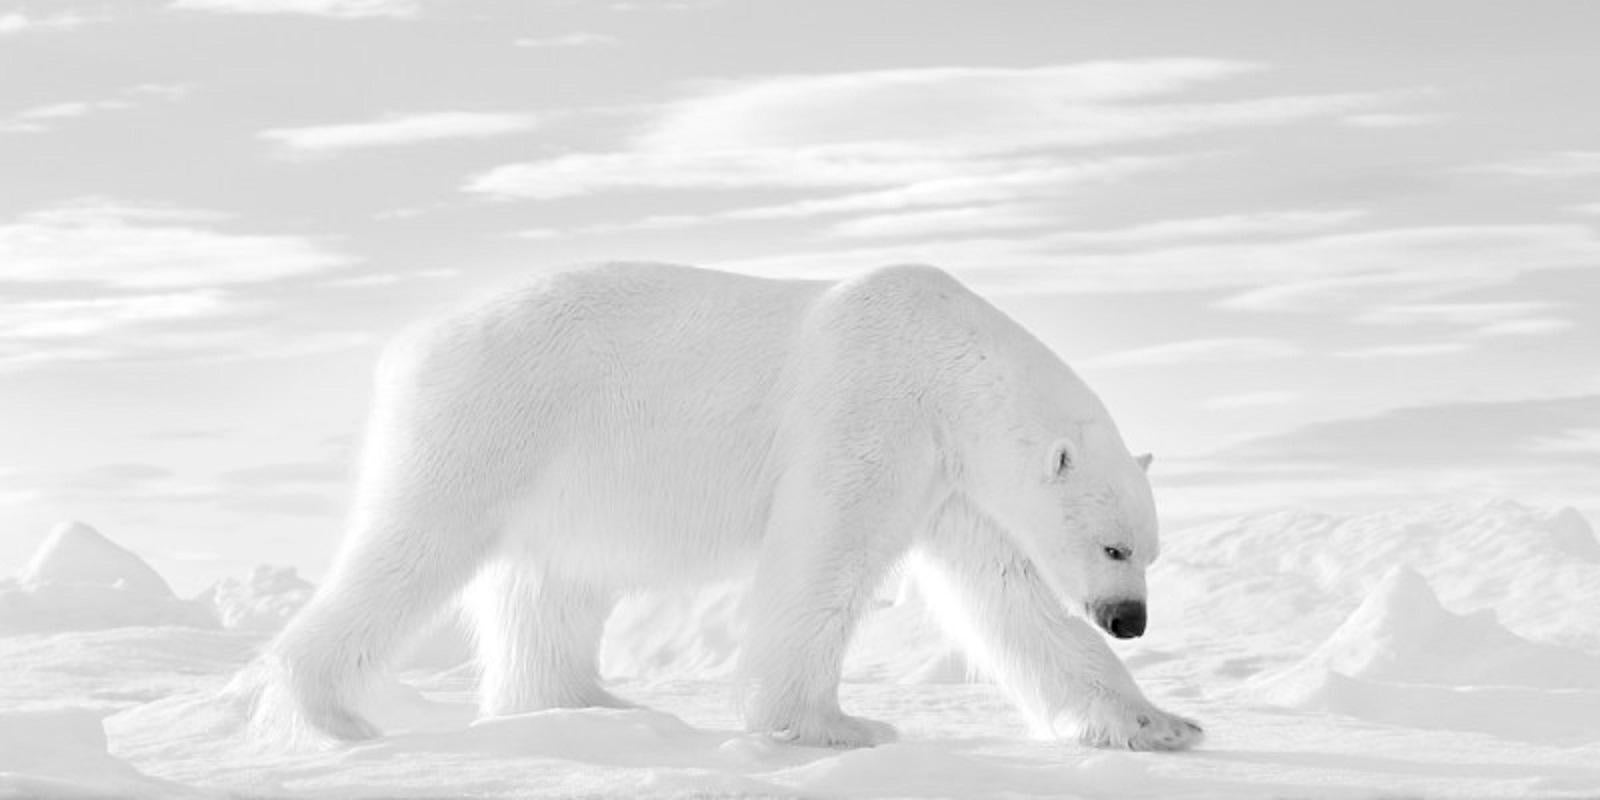 Prince of the Arctic (8.85" x 17.7") - Photograph by Kyriakos Kaziras